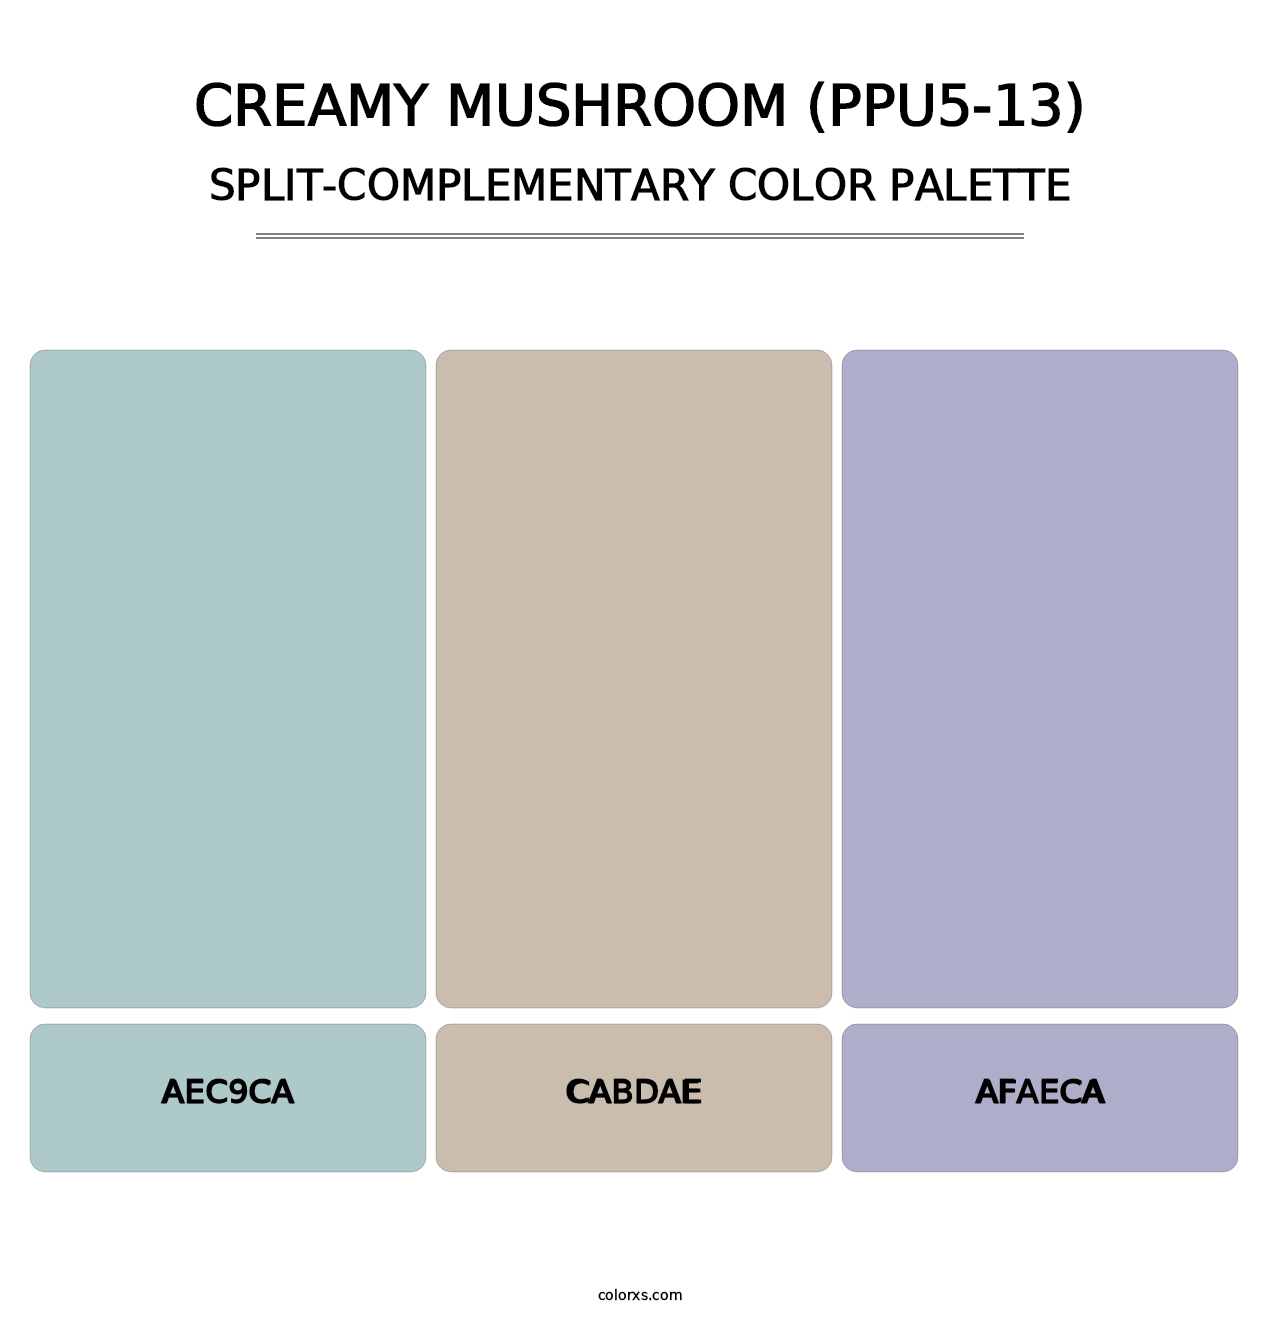 Creamy Mushroom (PPU5-13) - Split-Complementary Color Palette